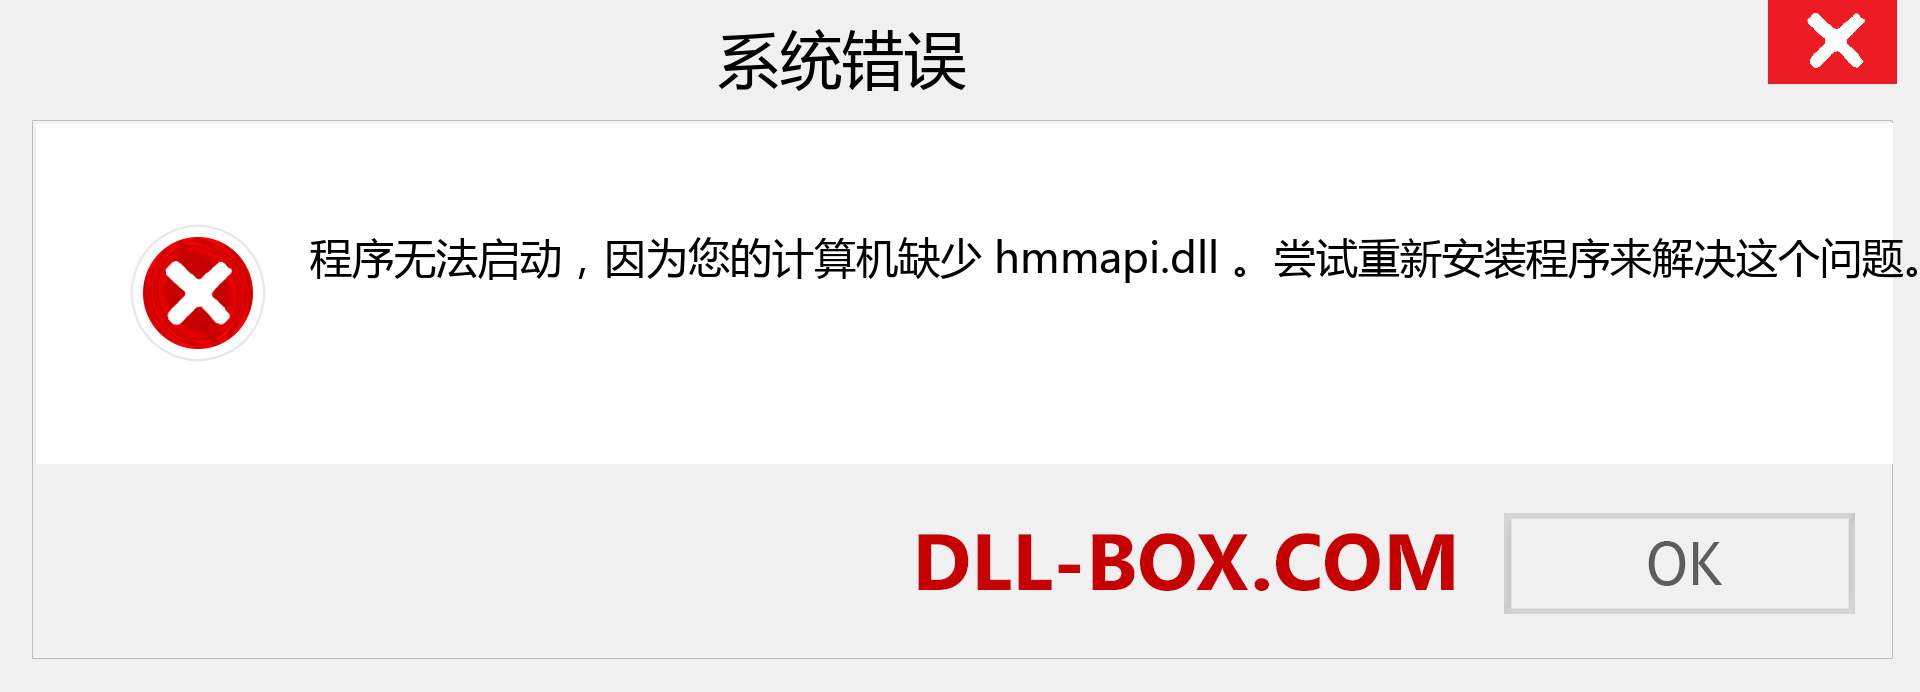 hmmapi.dll 文件丢失？。 适用于 Windows 7、8、10 的下载 - 修复 Windows、照片、图像上的 hmmapi dll 丢失错误